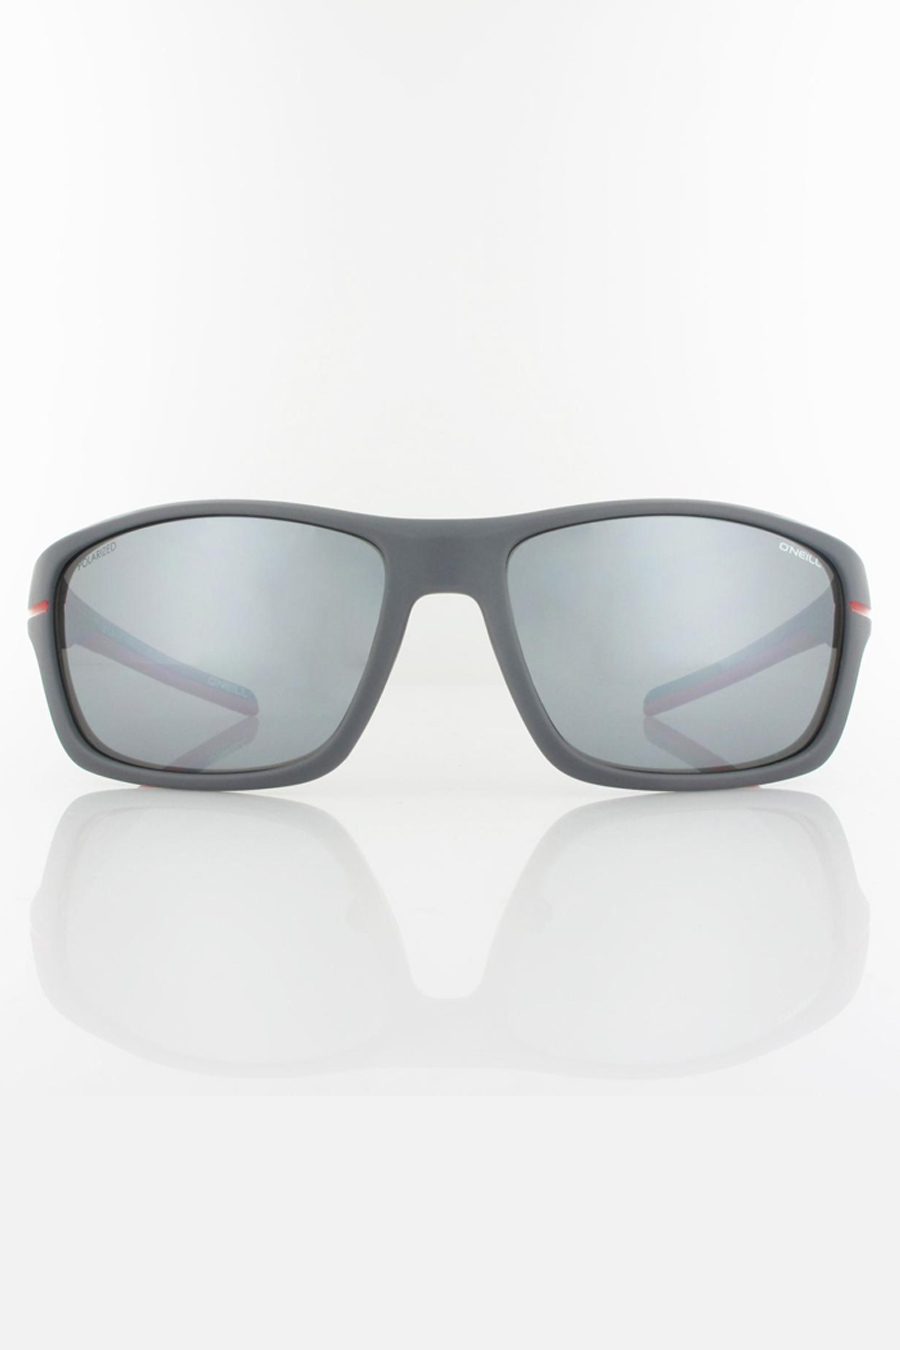 Солнечные очки ONEILL ONS-9021-20-108P